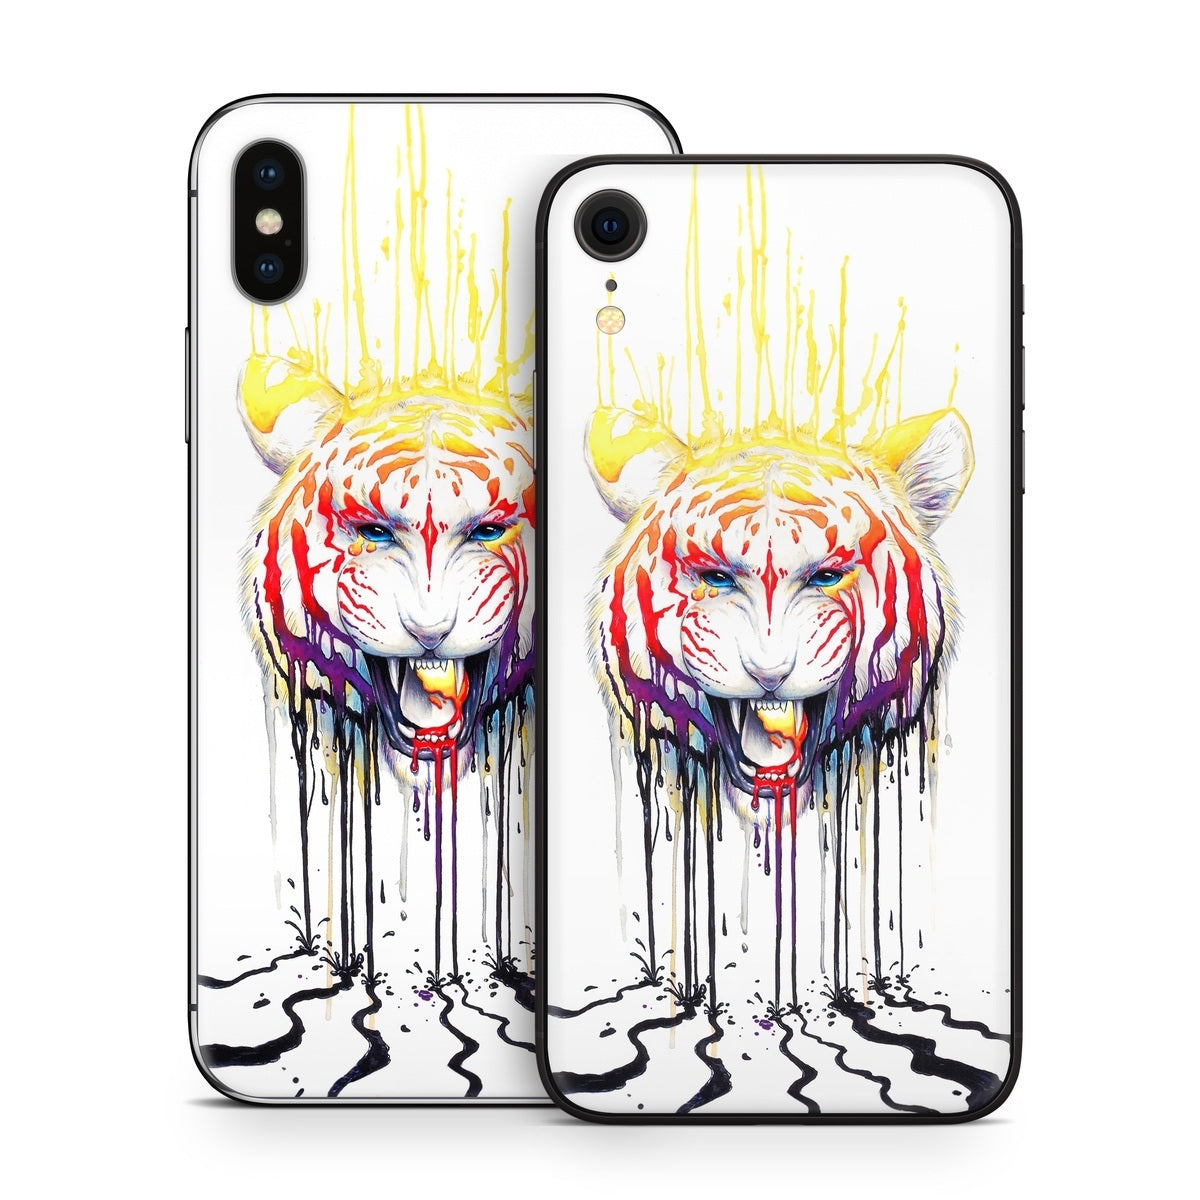 Fading Tiger - Apple iPhone X Skin